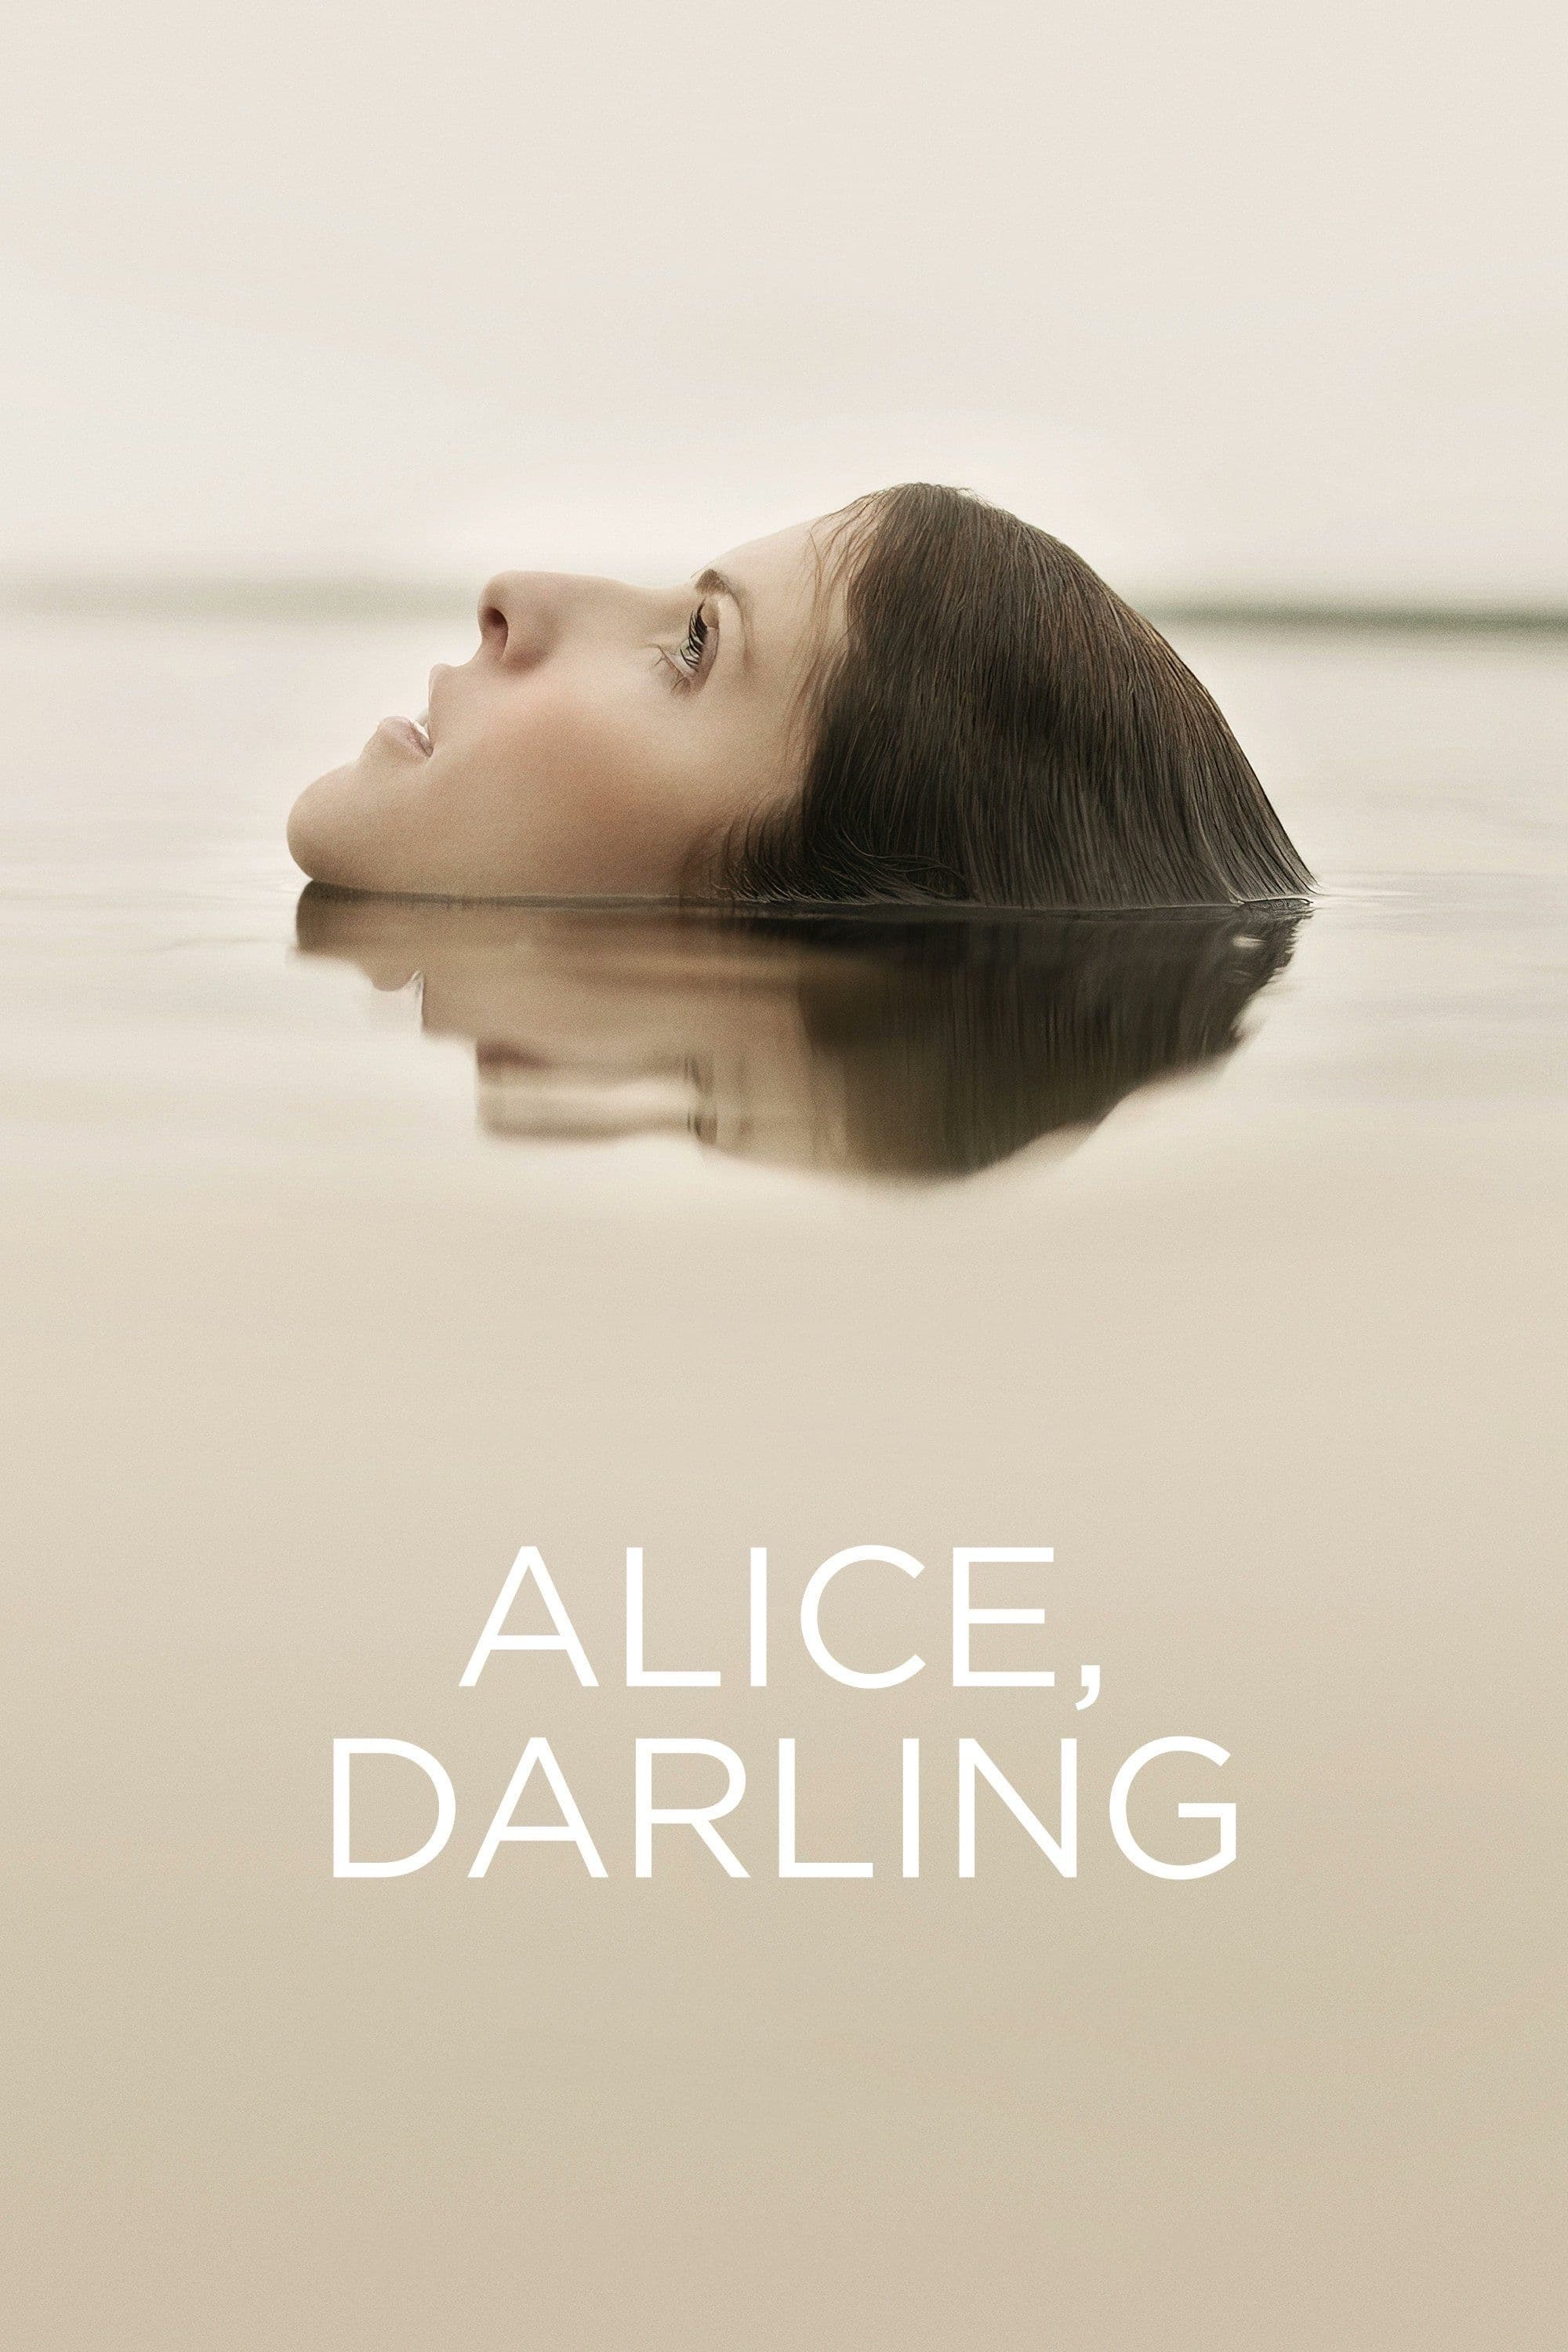 Alice, Darling - Union Films